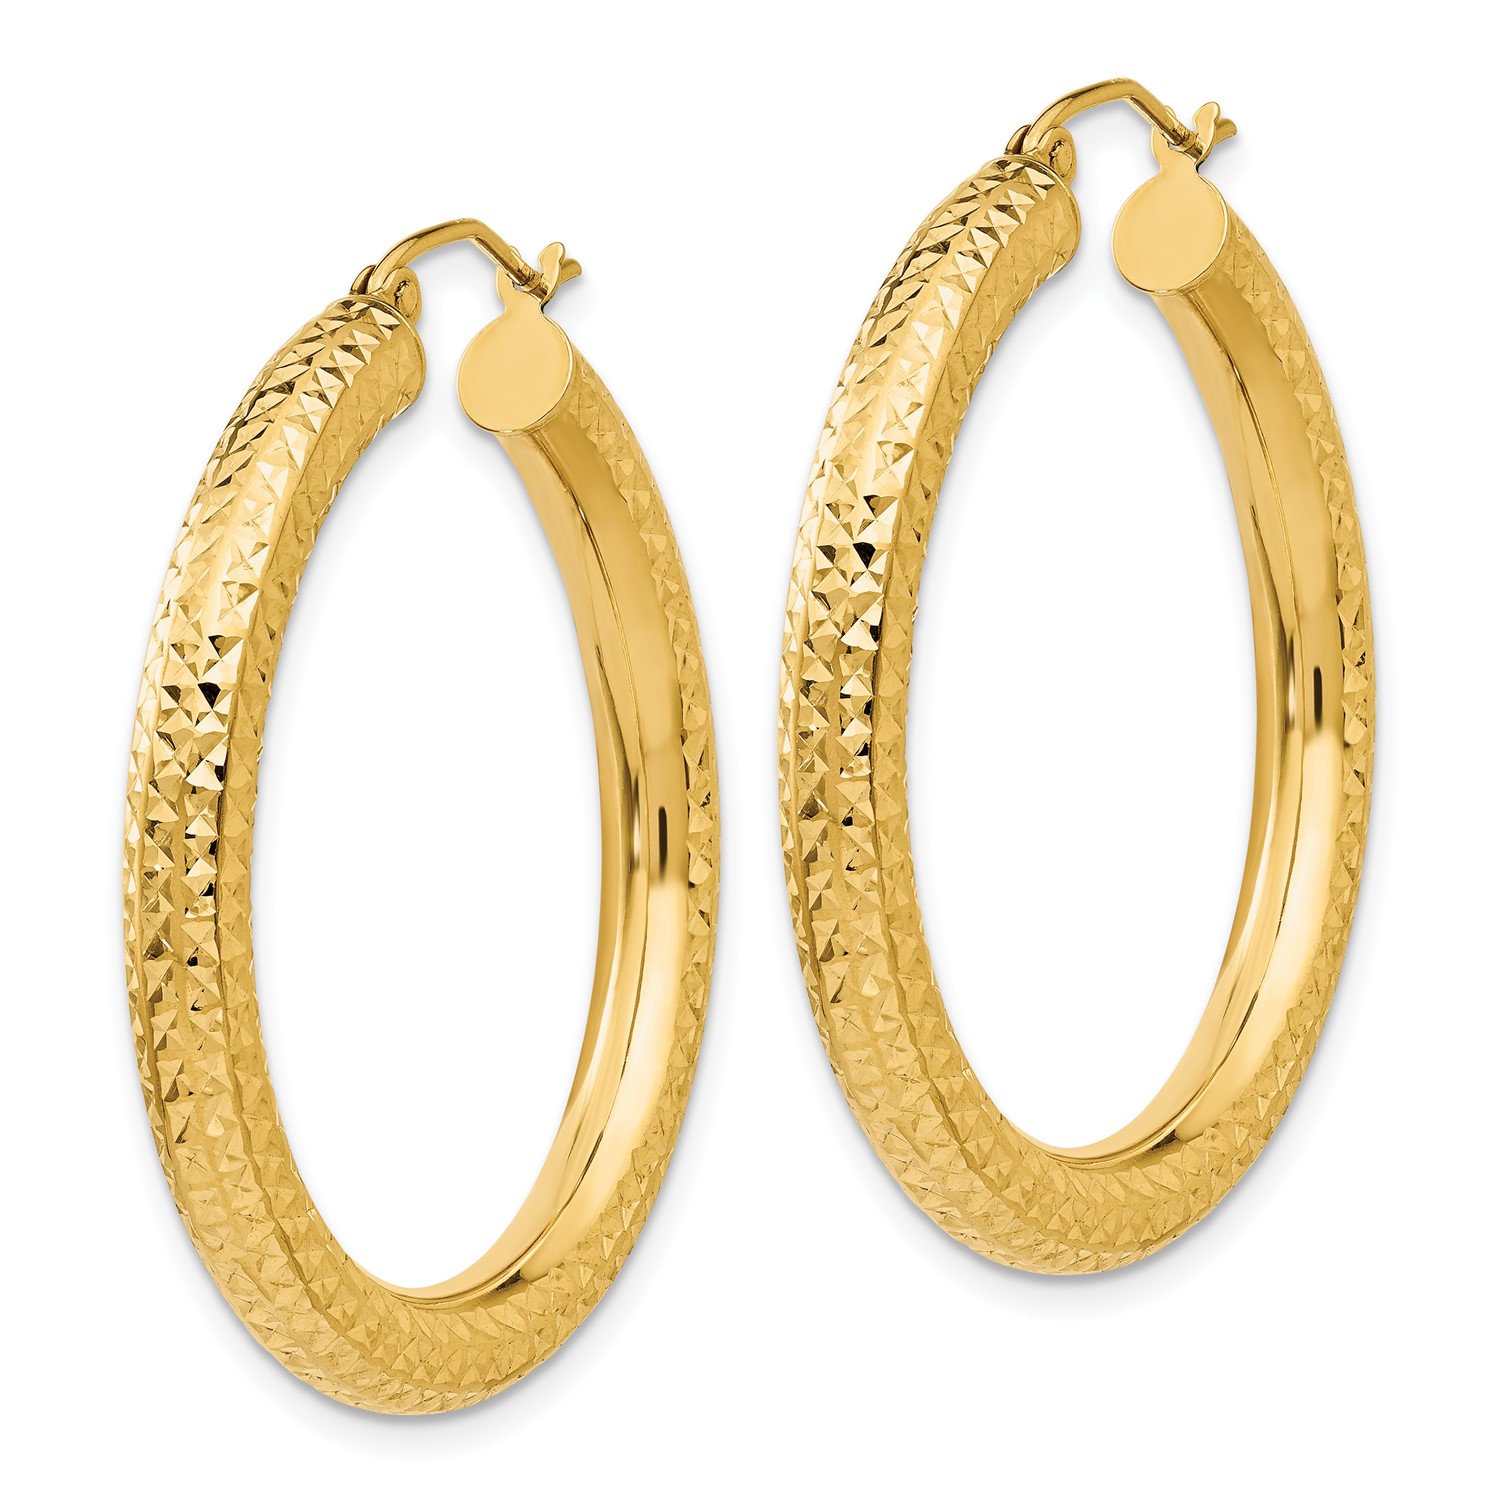 14k Yellow Gold Diamond-cut 4mm Round Hoop Earrings. 33mm Diameter. | eBay